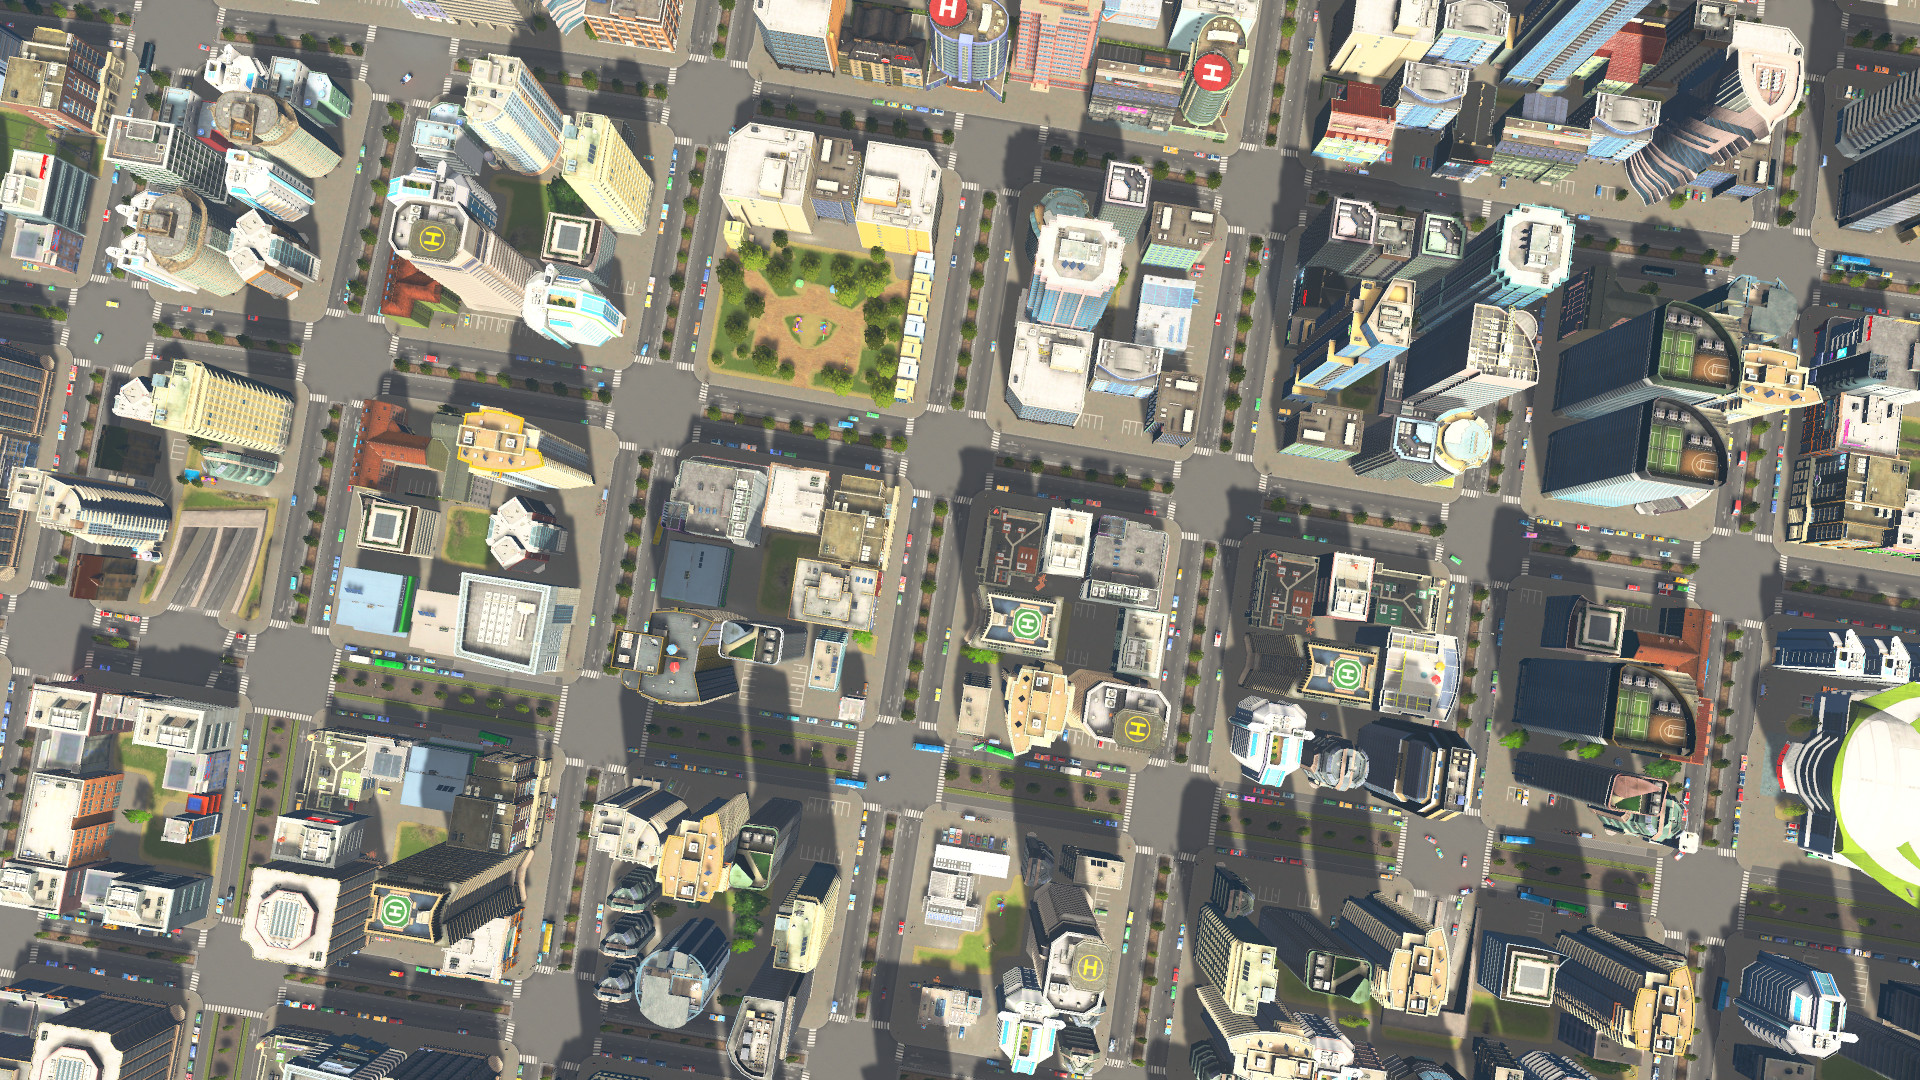 Roblox Tutorial for City Creation - Part 2 - City Design & Google Map 